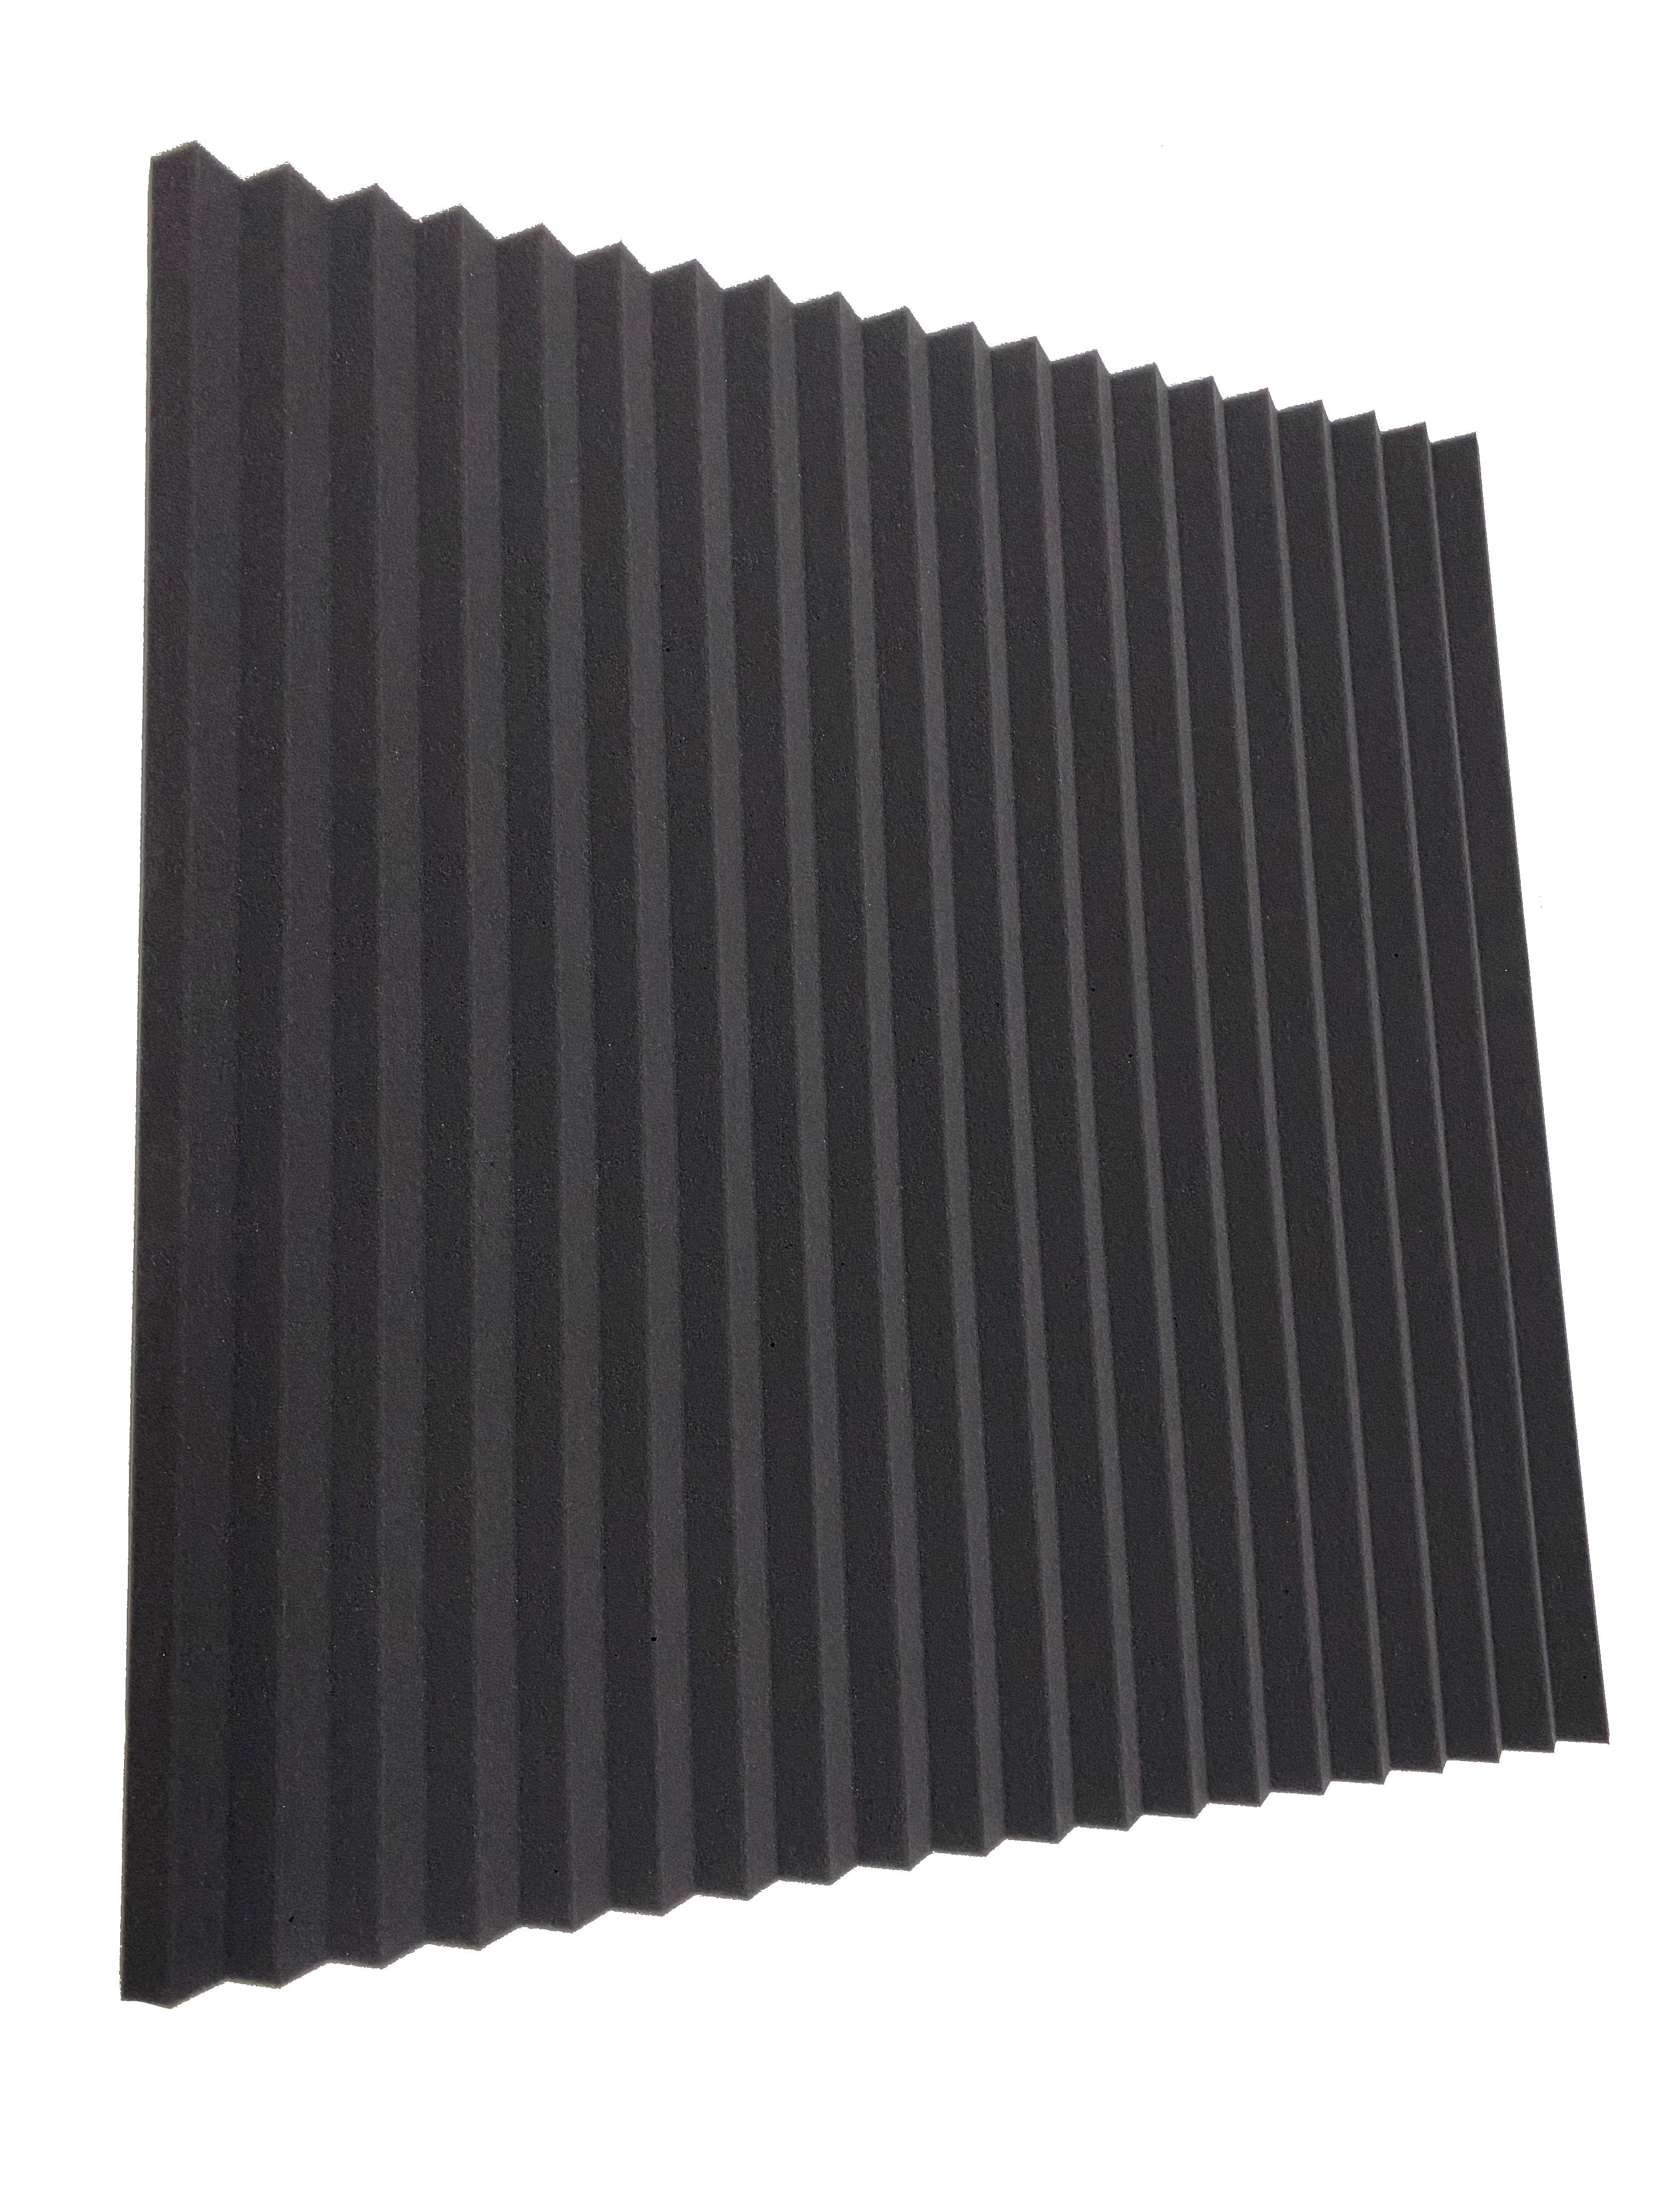 Kaufen dunkelgrau Wedge 76,2 cm Acoustic Studio Foam Tile Kit – 18 Fliesen, 10,44 m² Abdeckung